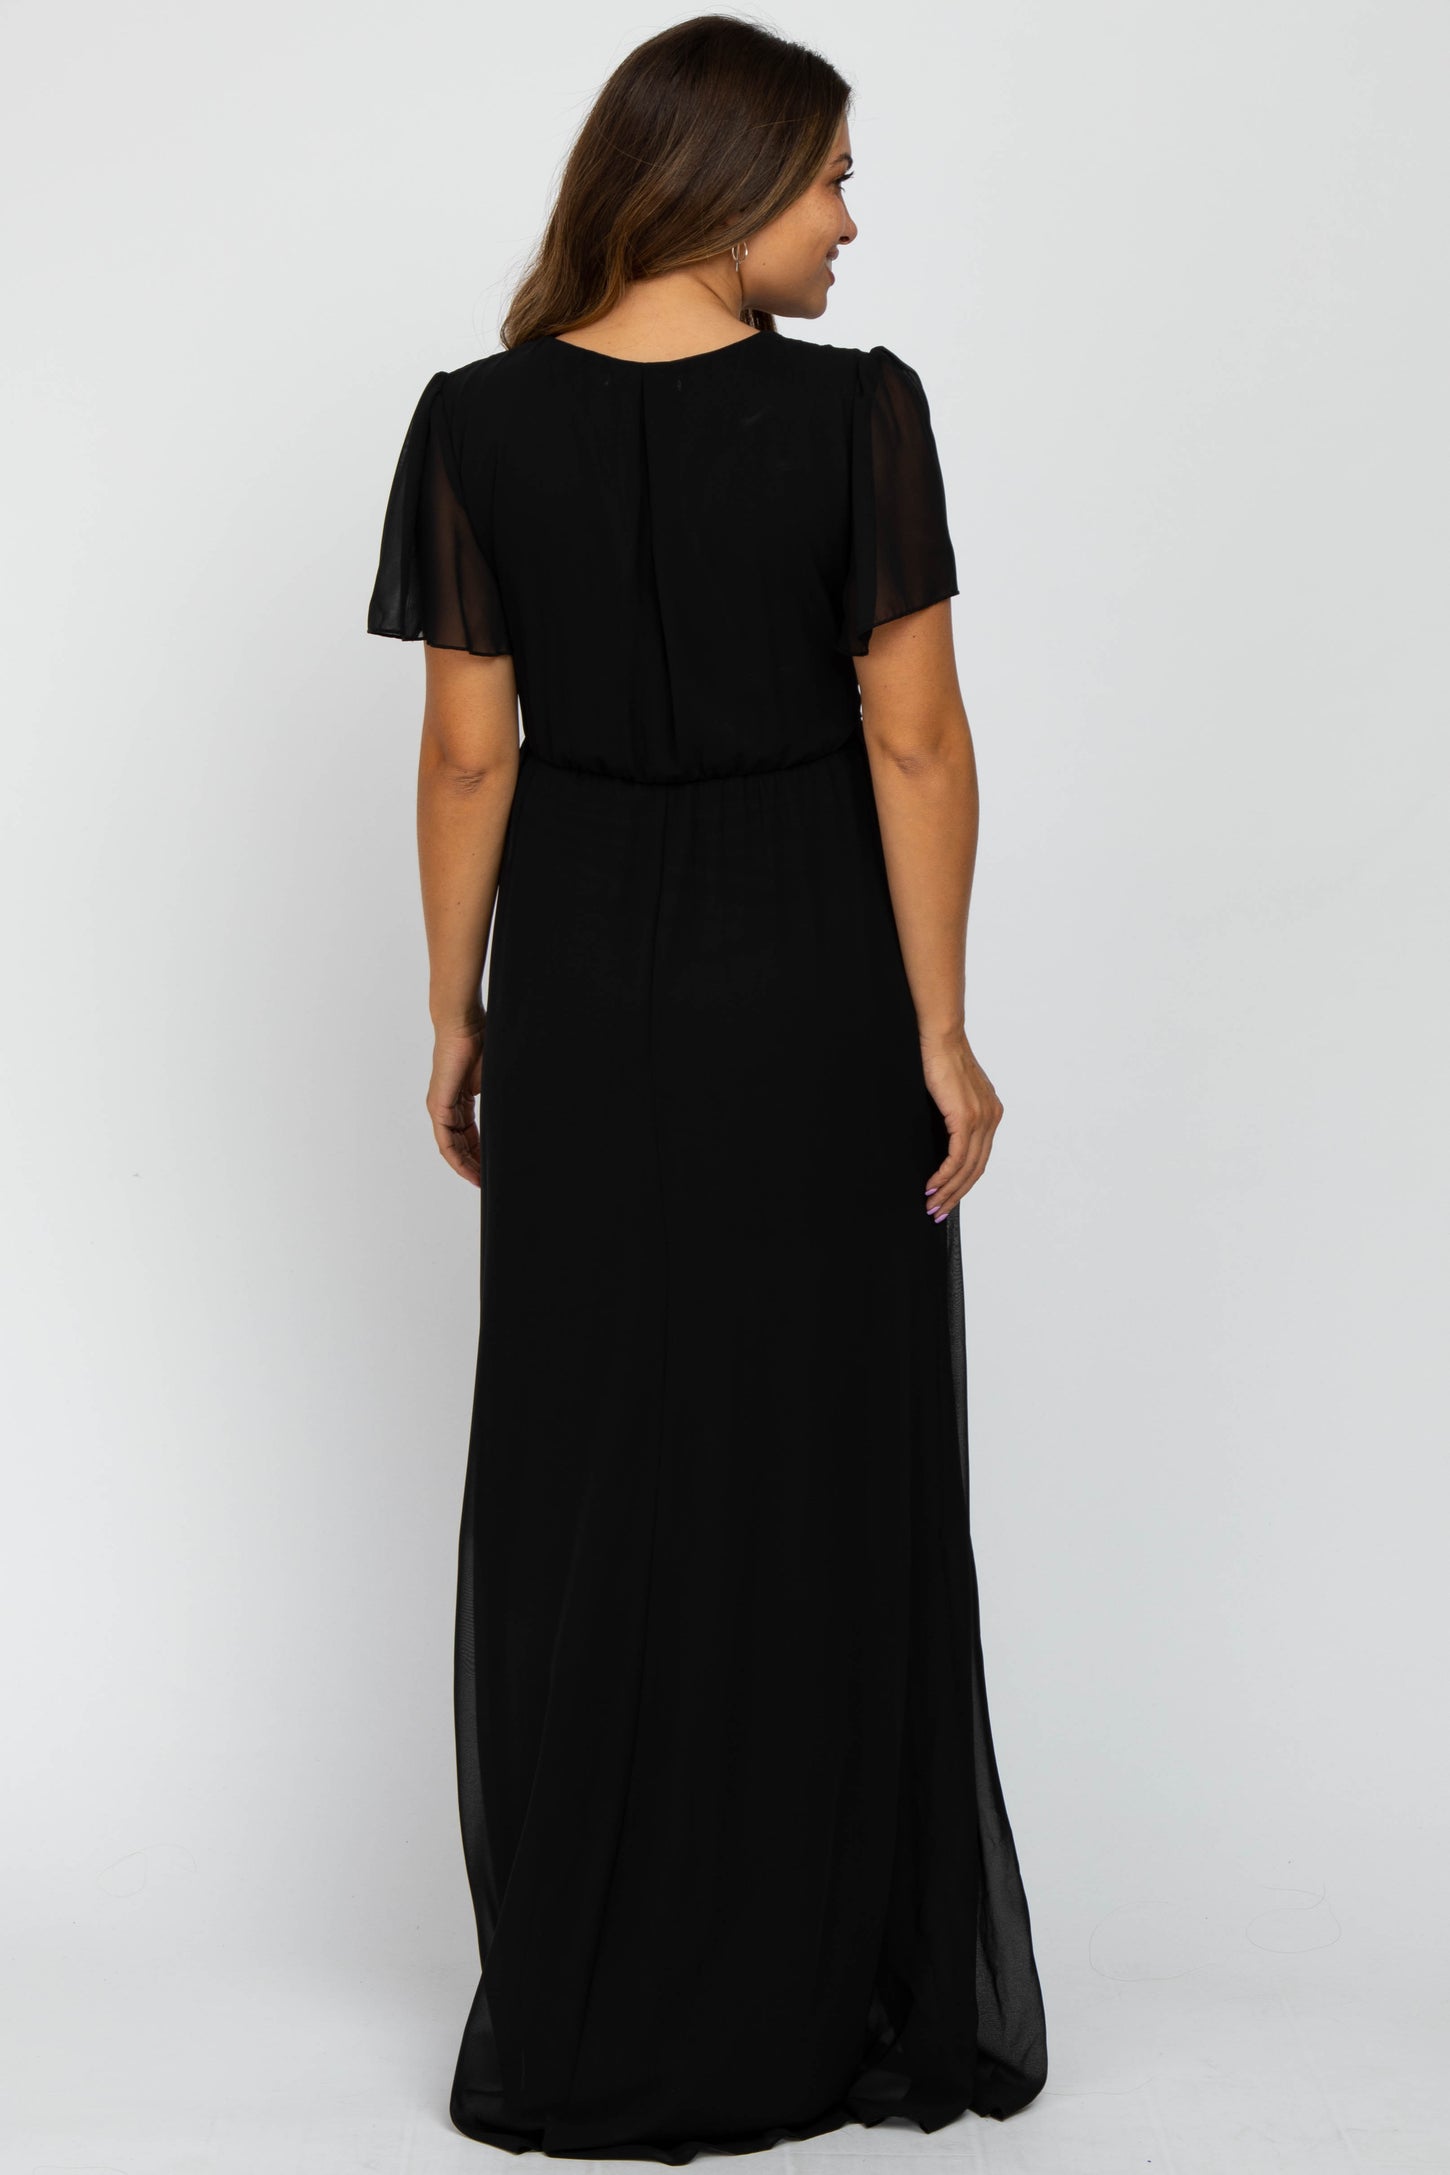 Black Chiffon Short Sleeve Maternity Maxi Dress– PinkBlush